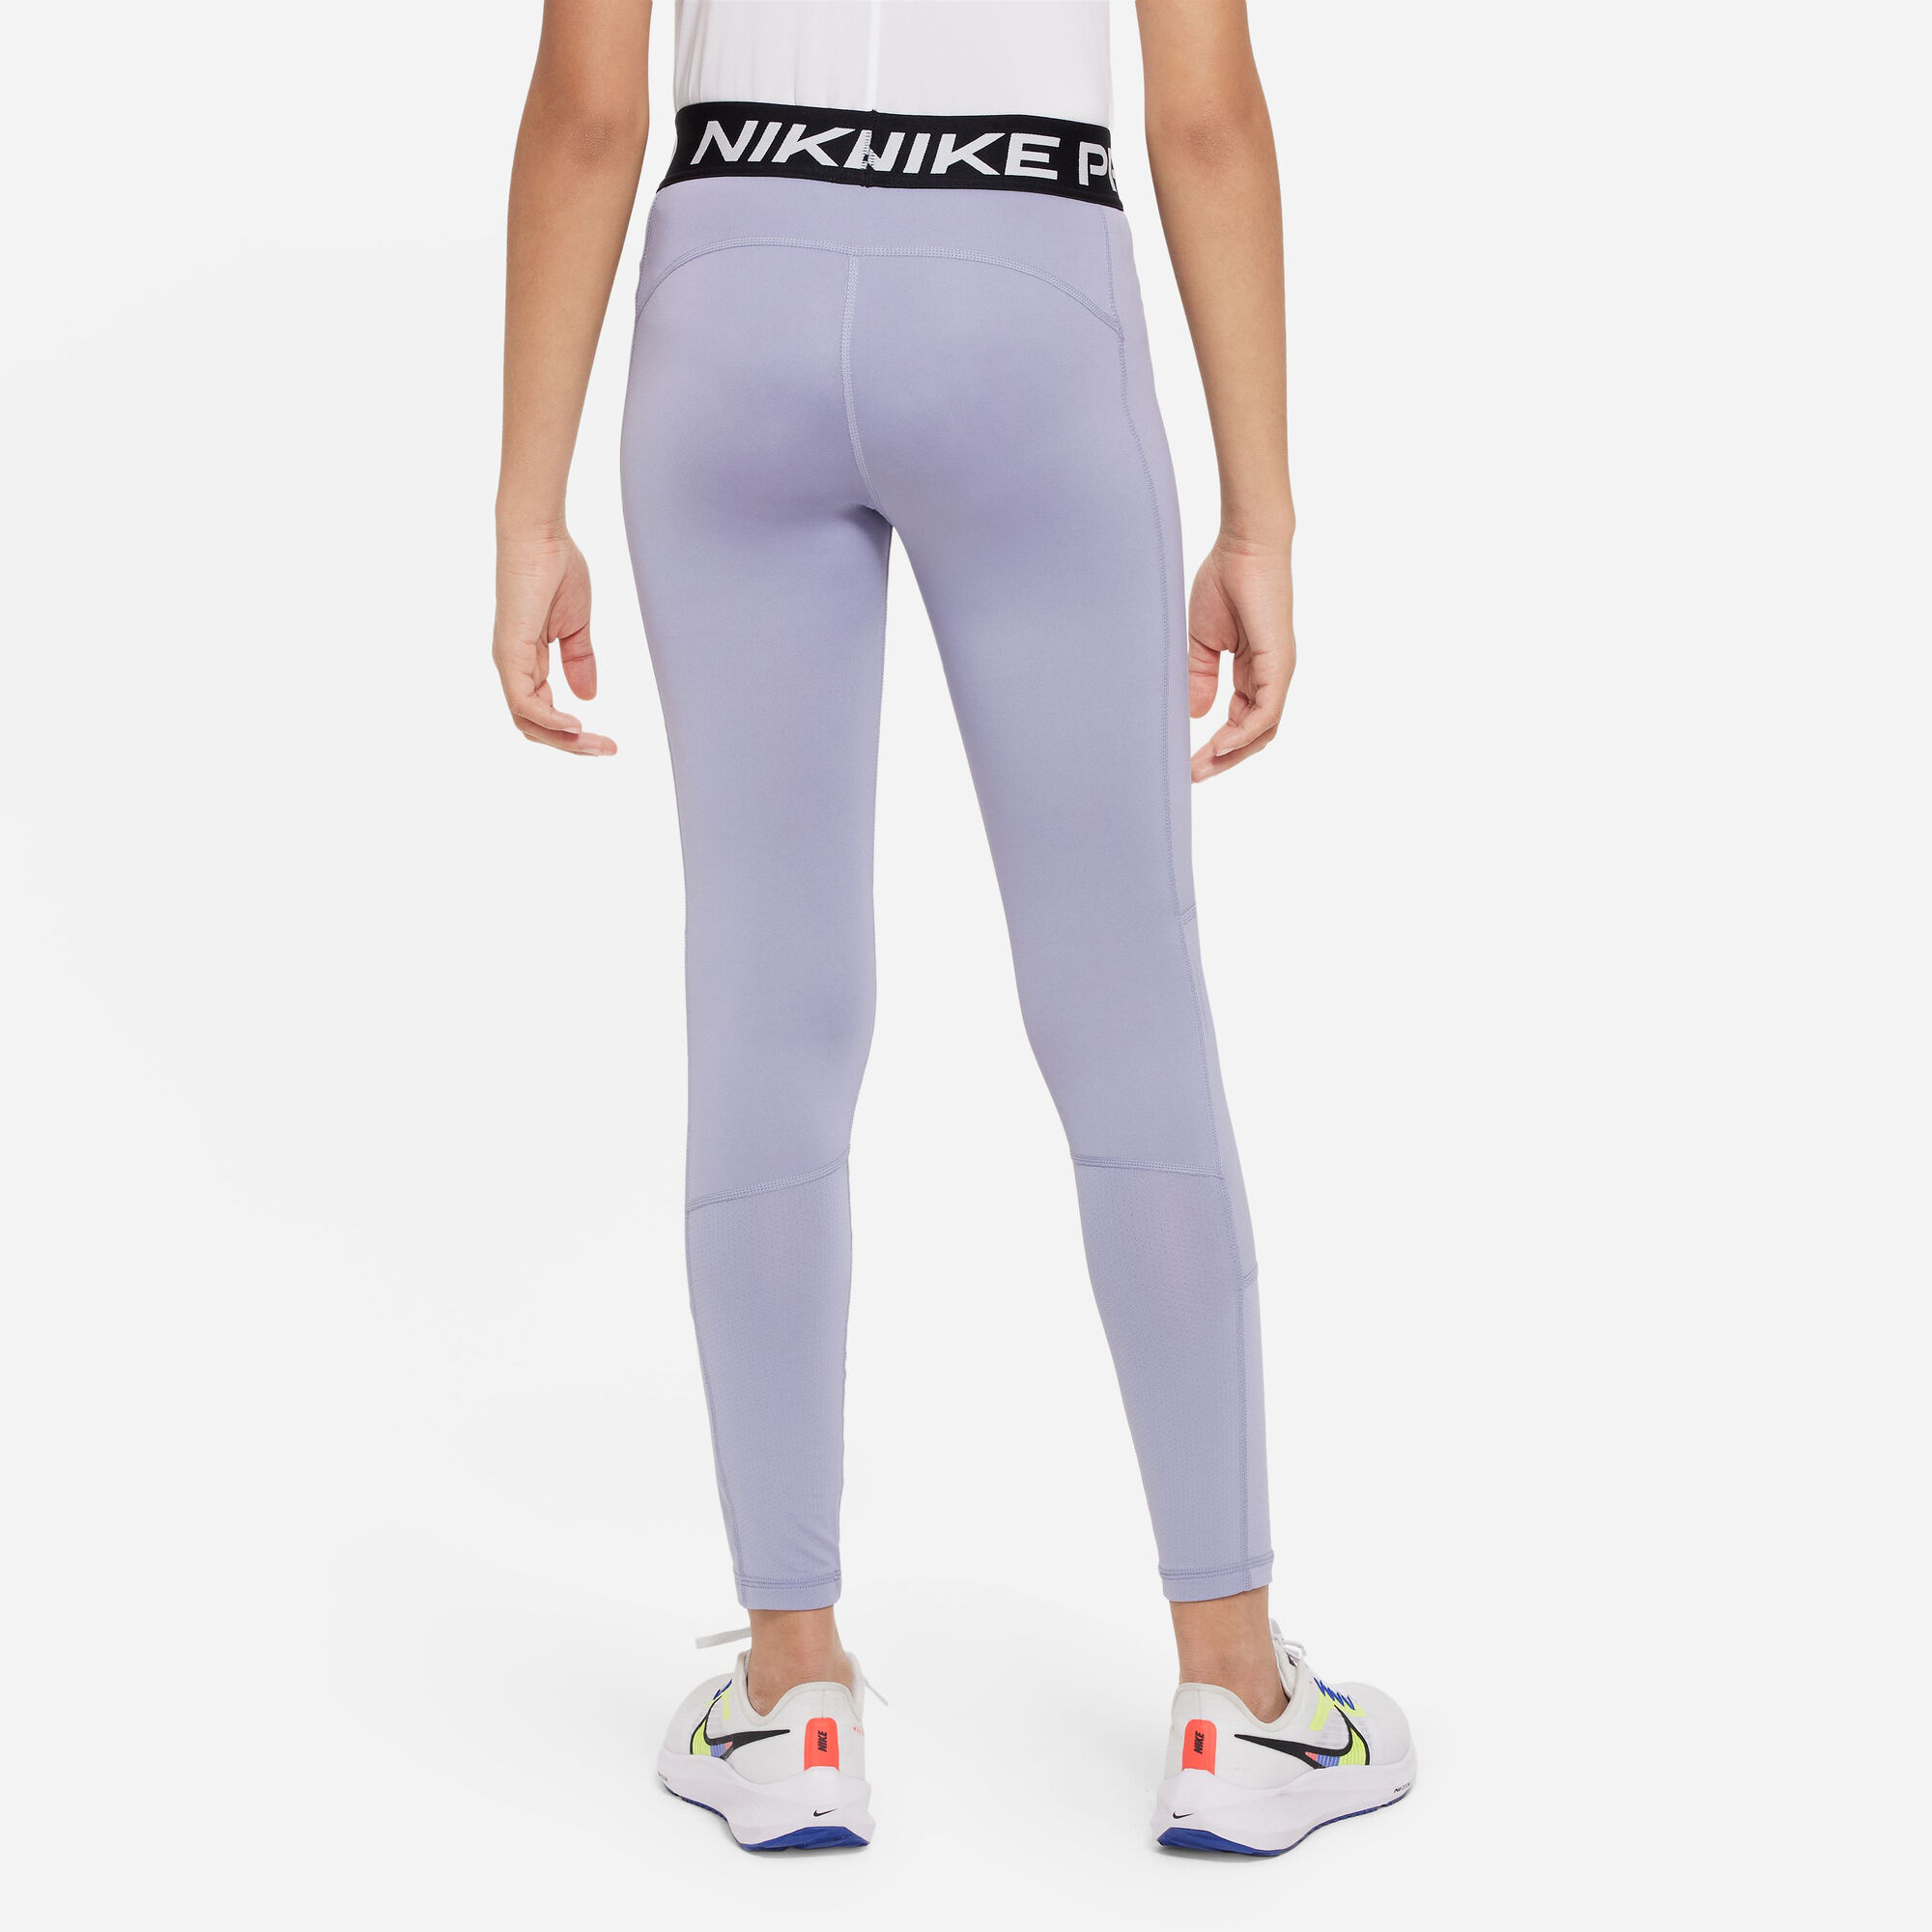 Nike Pro Intertwist Tights in Grey